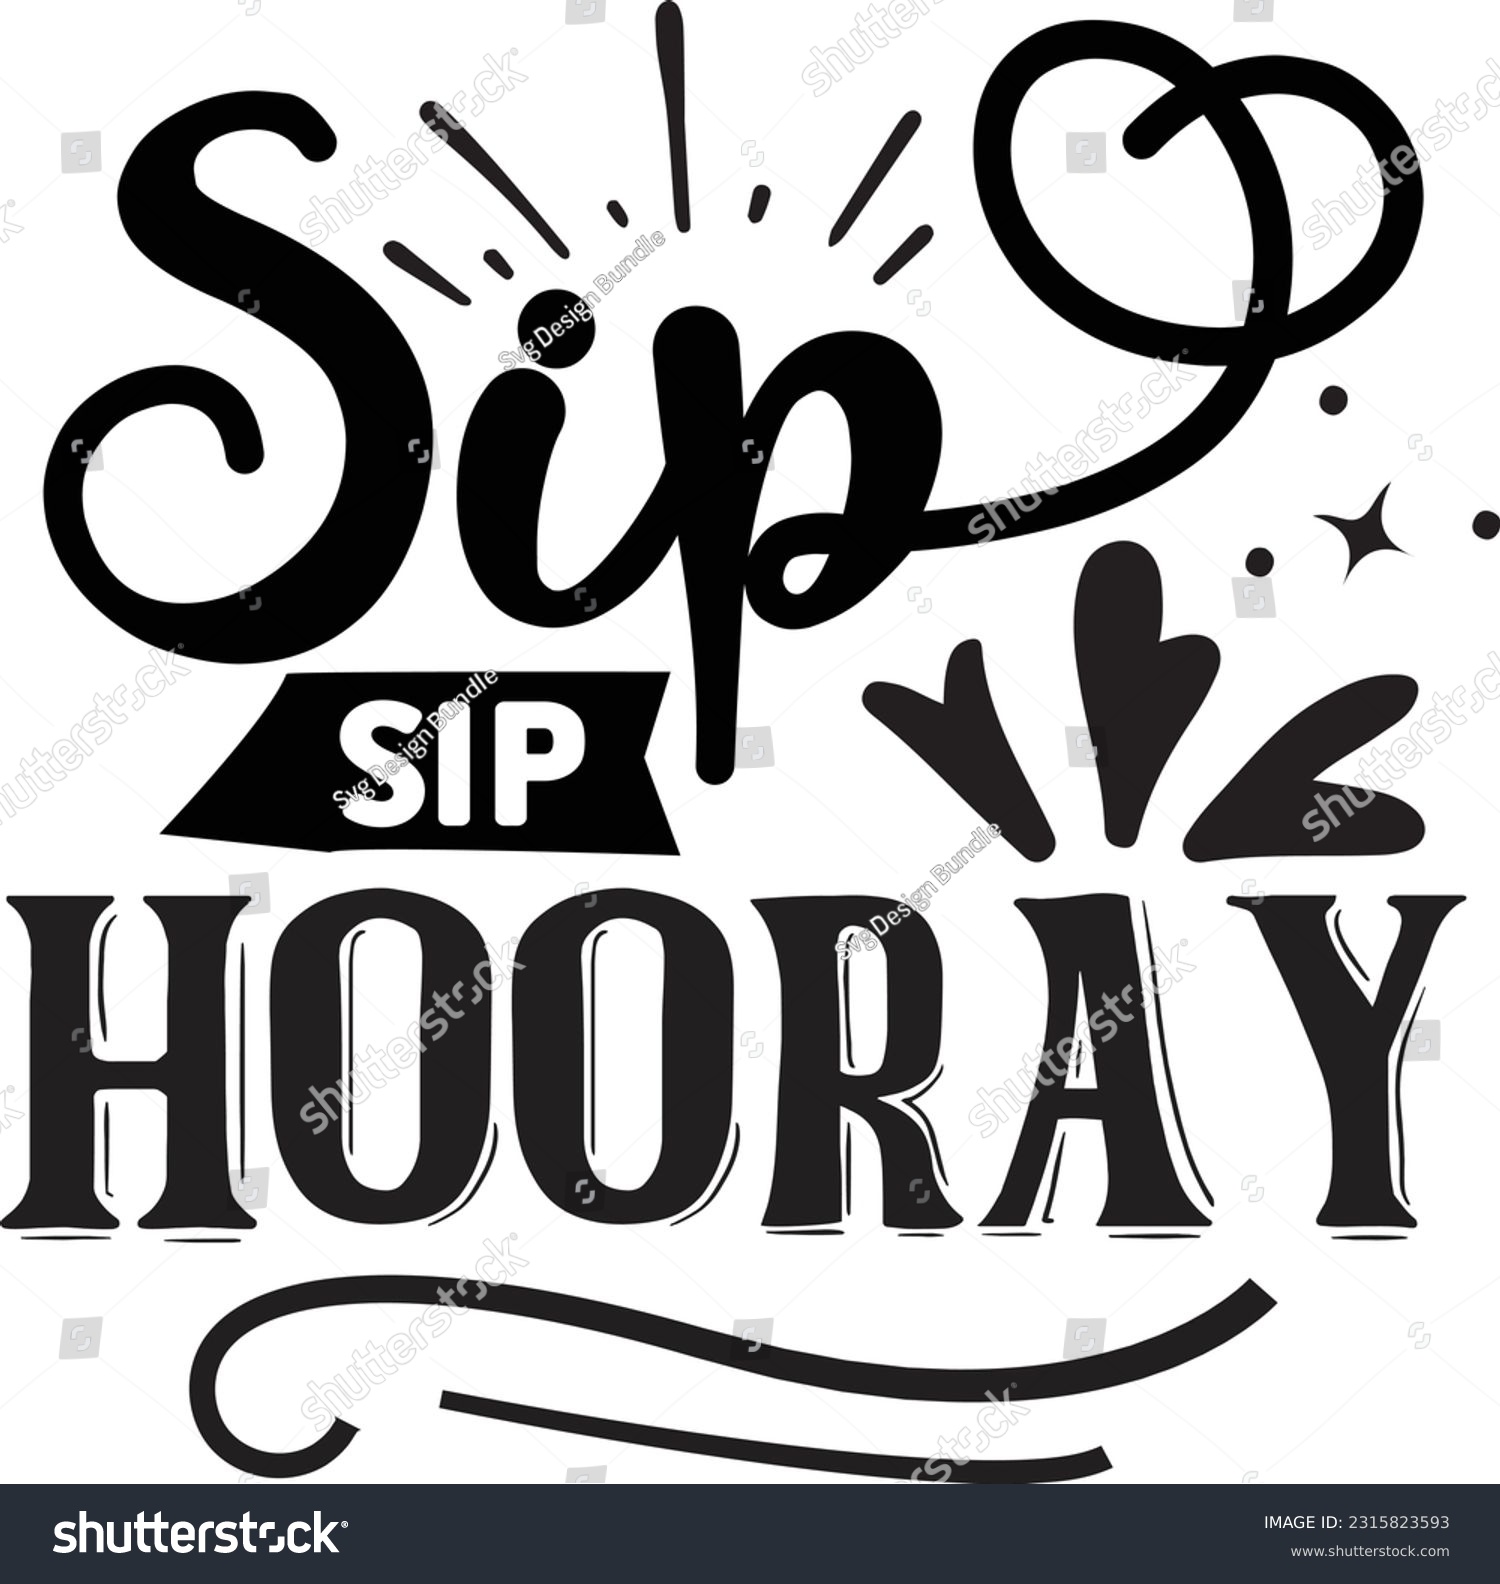 SVG of Sip sip hooray svg, wedding SVG Design, wedding quotes design svg